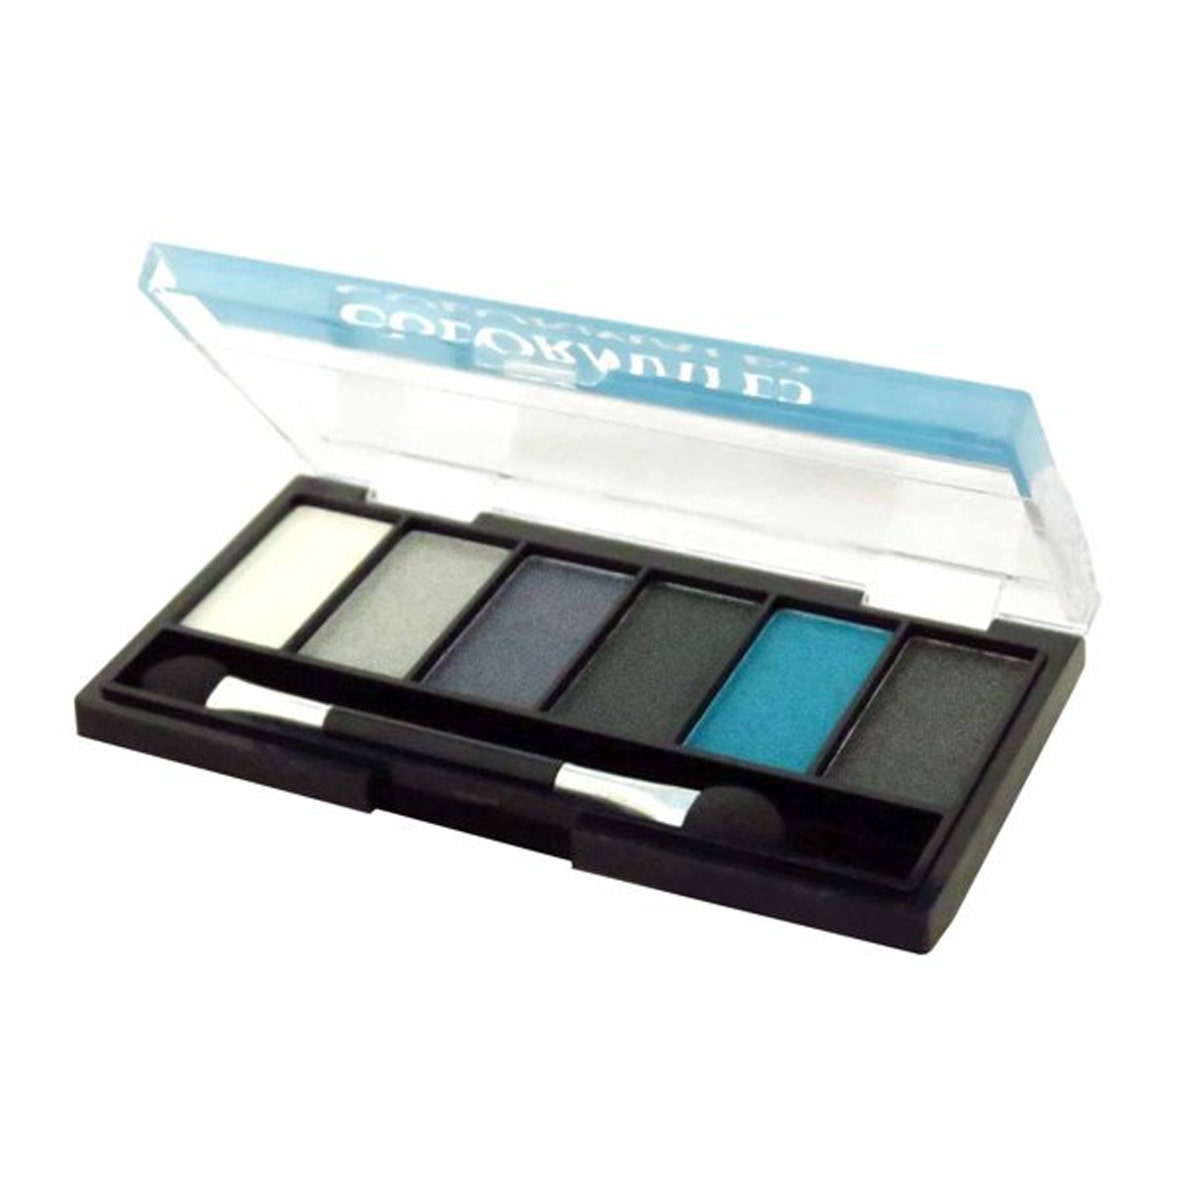 Colormates 6 Shade Mineral Eyeshadow Palette – Premium Blending